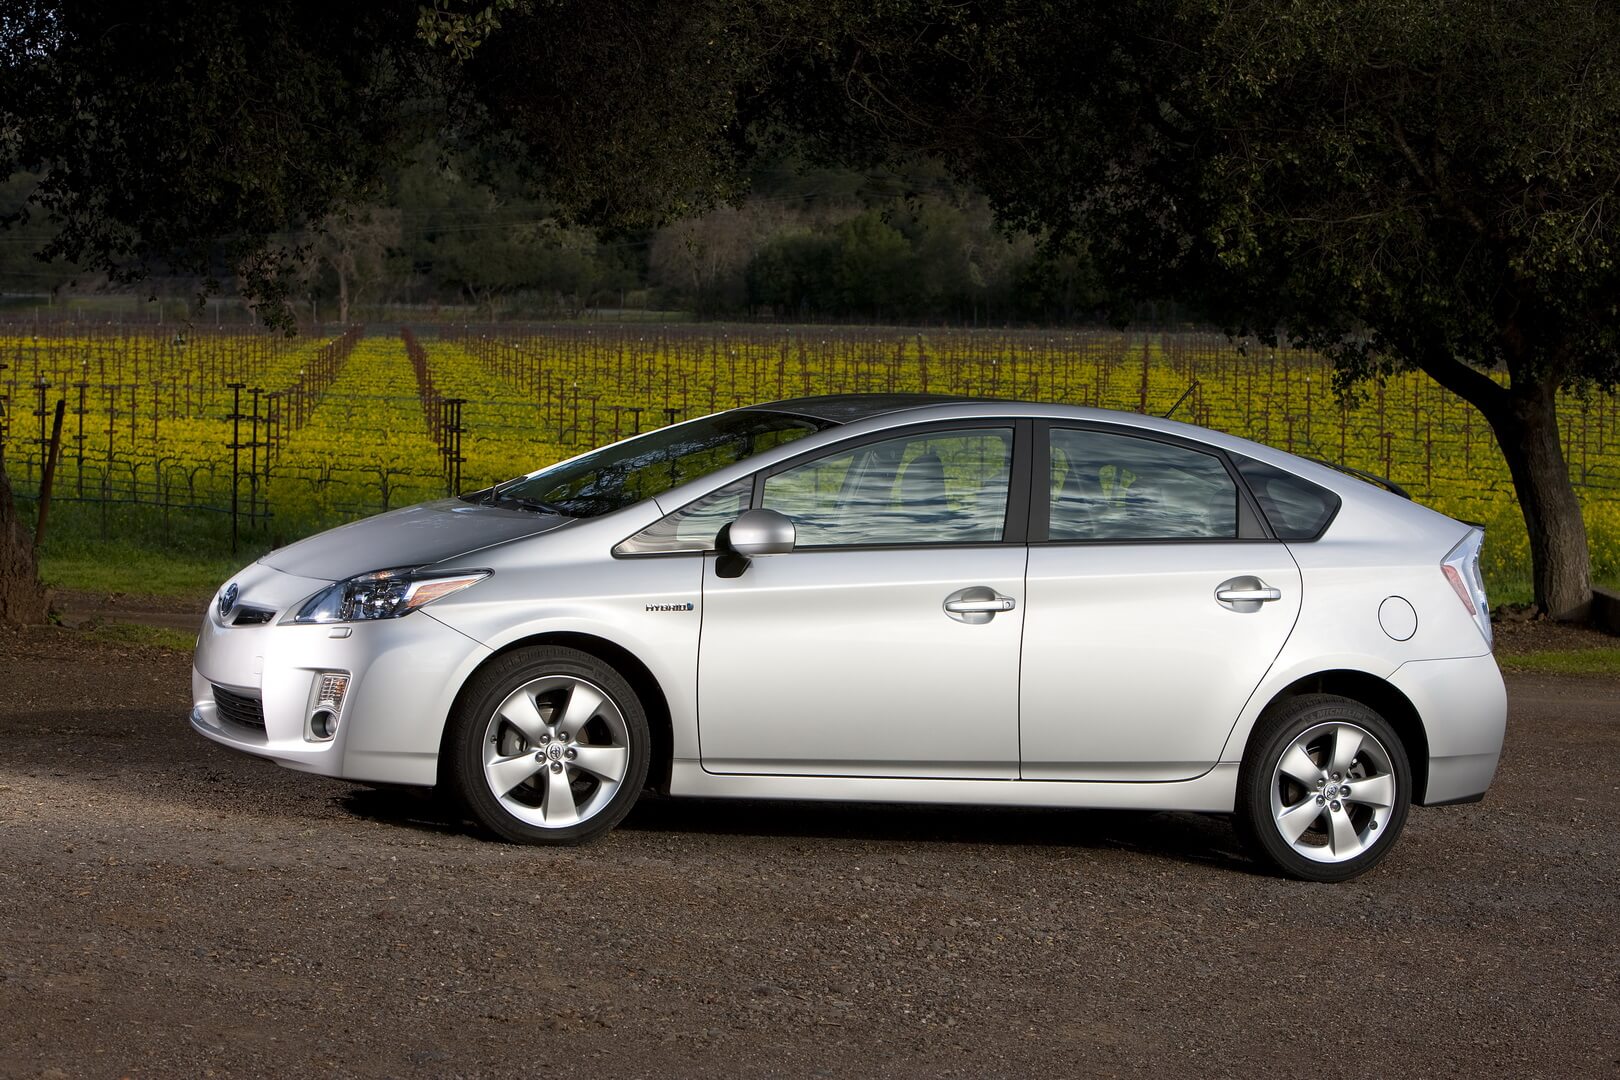 Фотография экоавто Toyota Prius Hybrid 2010 - фото 23